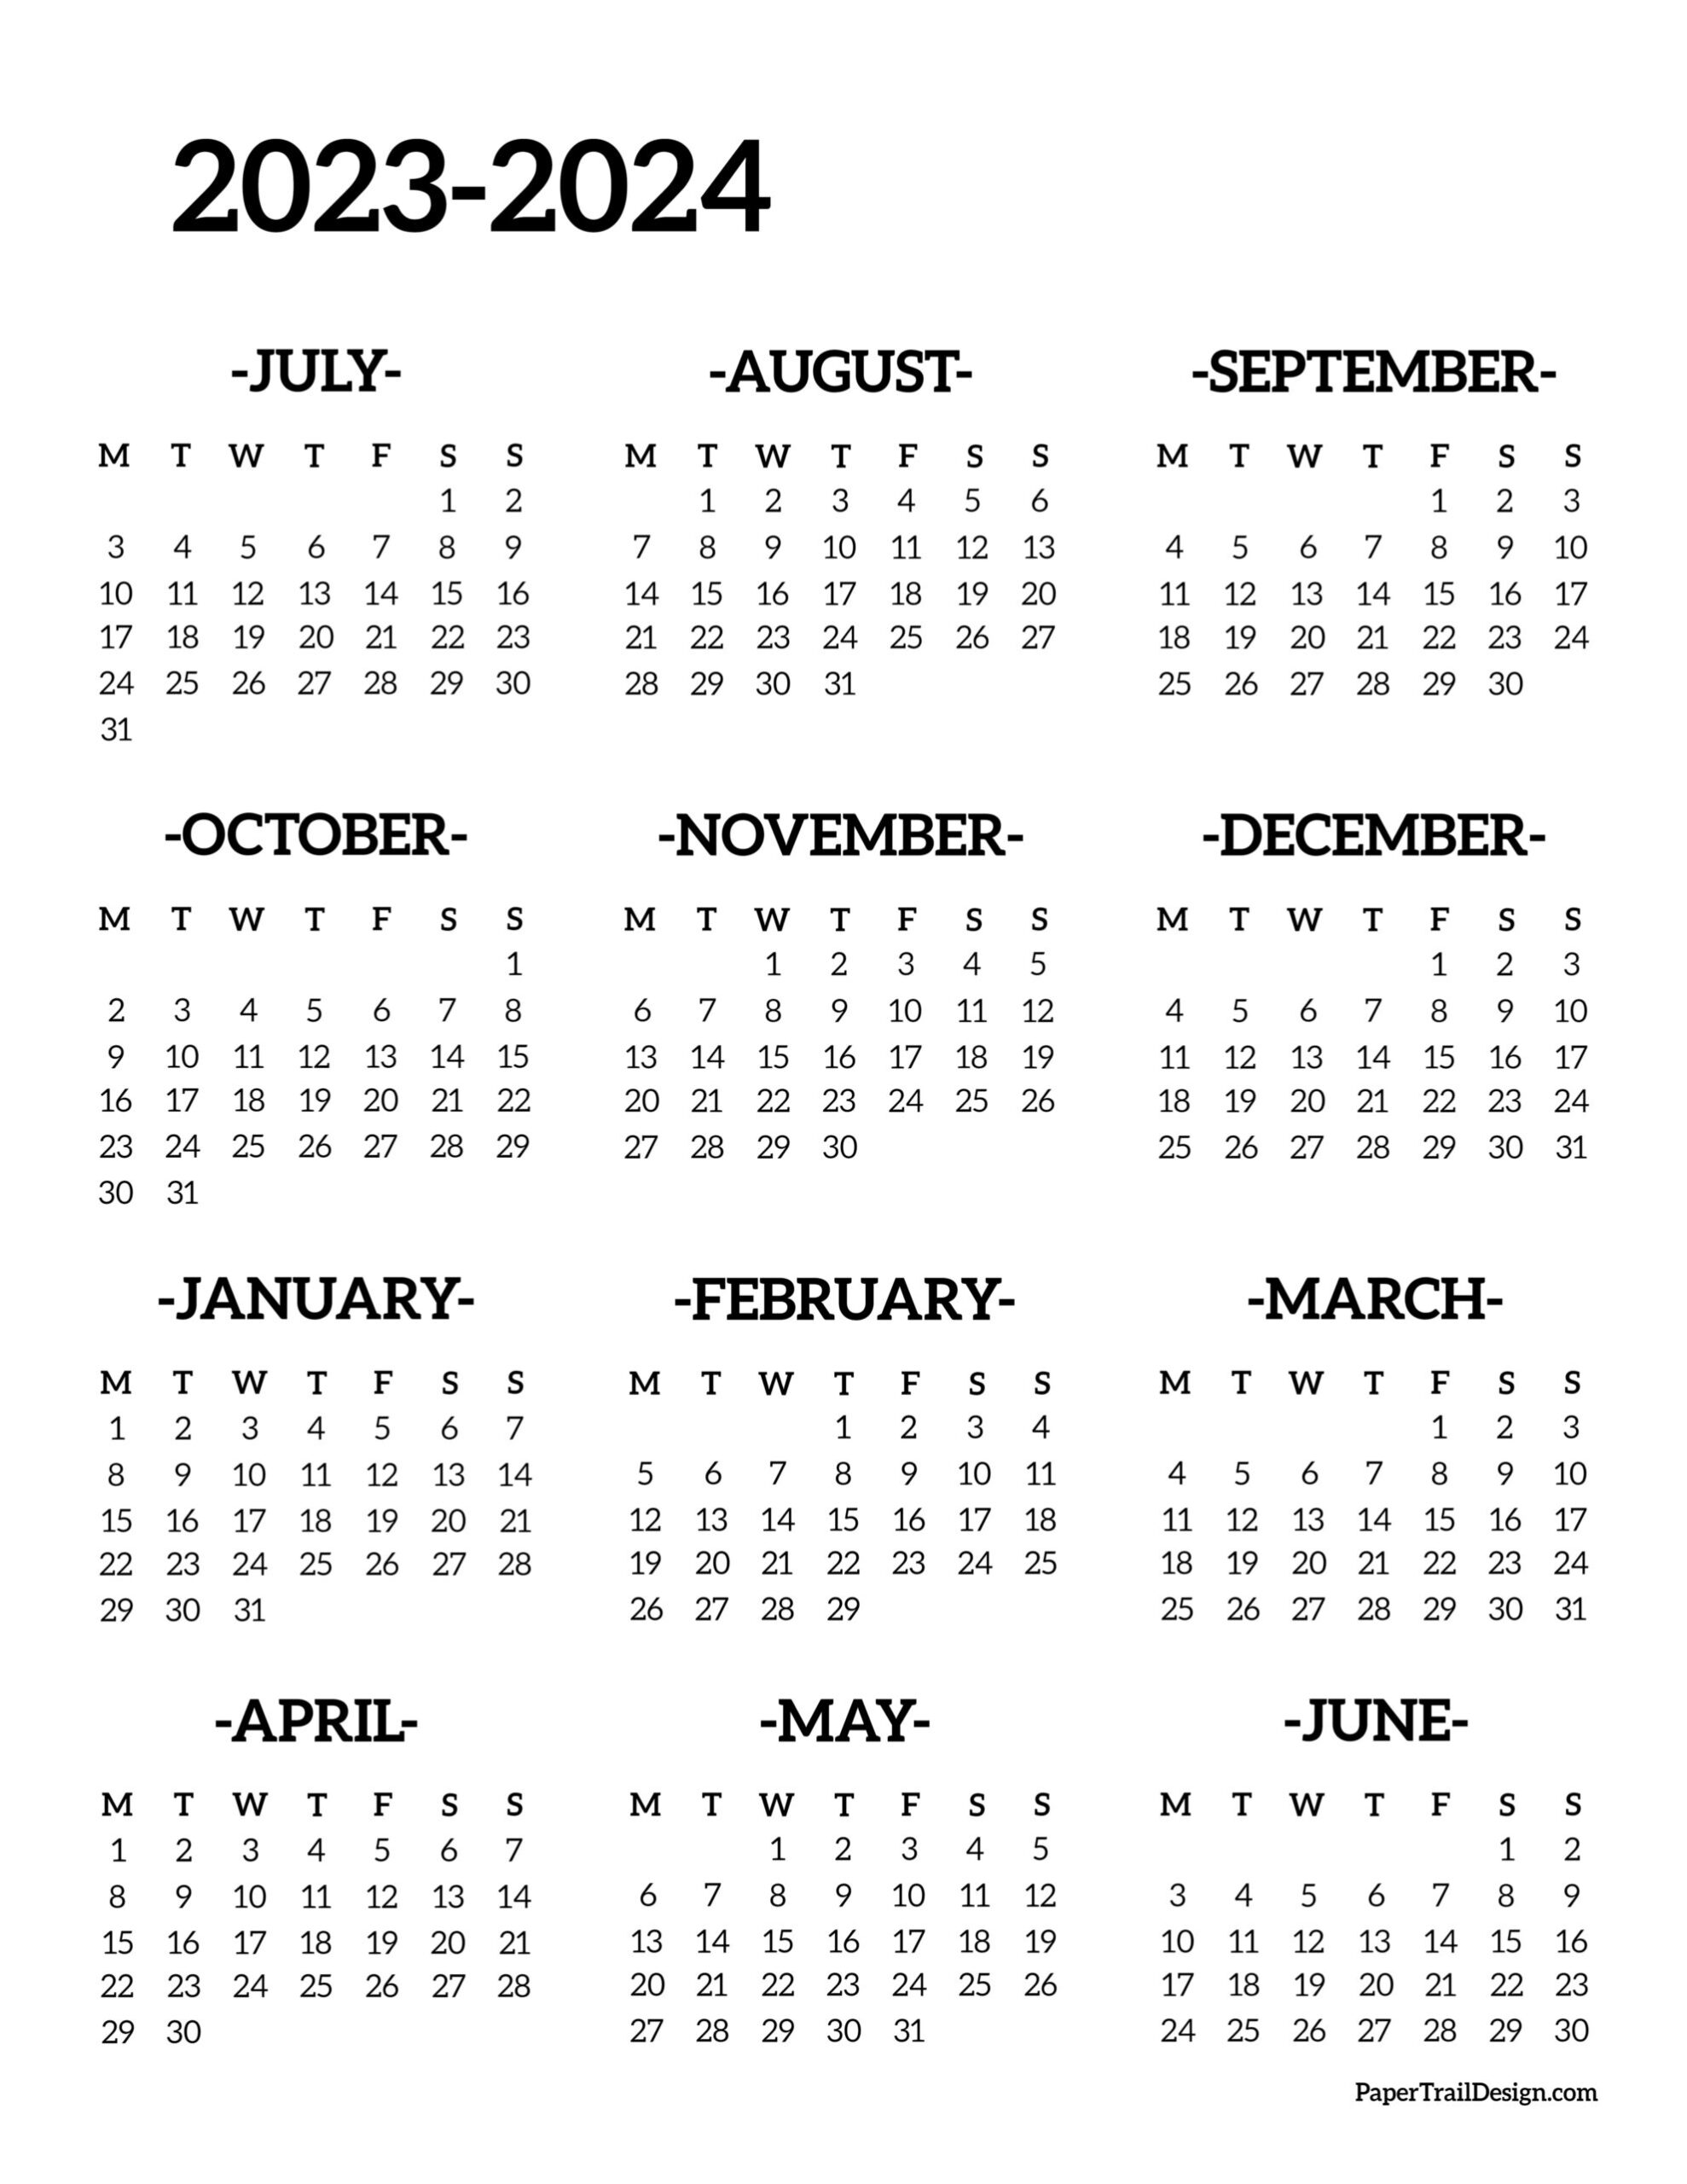 2023-2024 School Year Calendar Free Printable - Paper Trail Design | 2023 2024 Printable Calendar